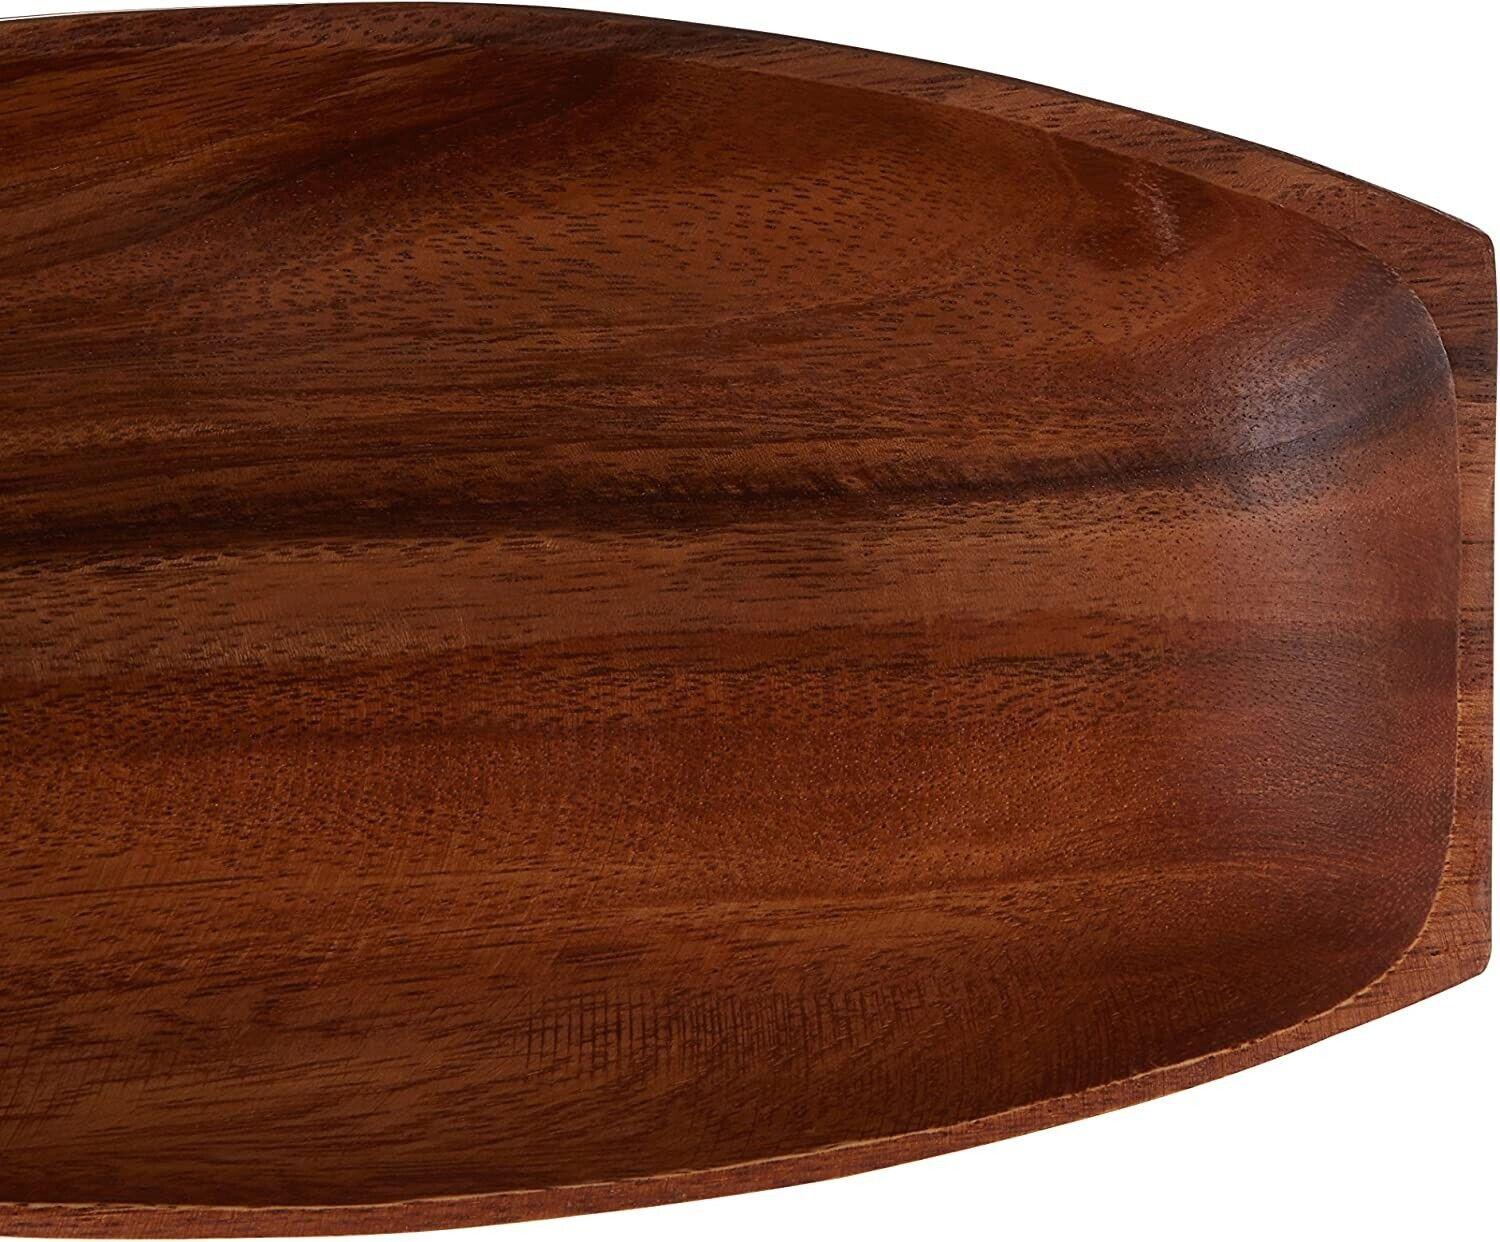 Acacia Wood Modern Oval Serving Dish 5x30x15cm Brown - Massive Discounts